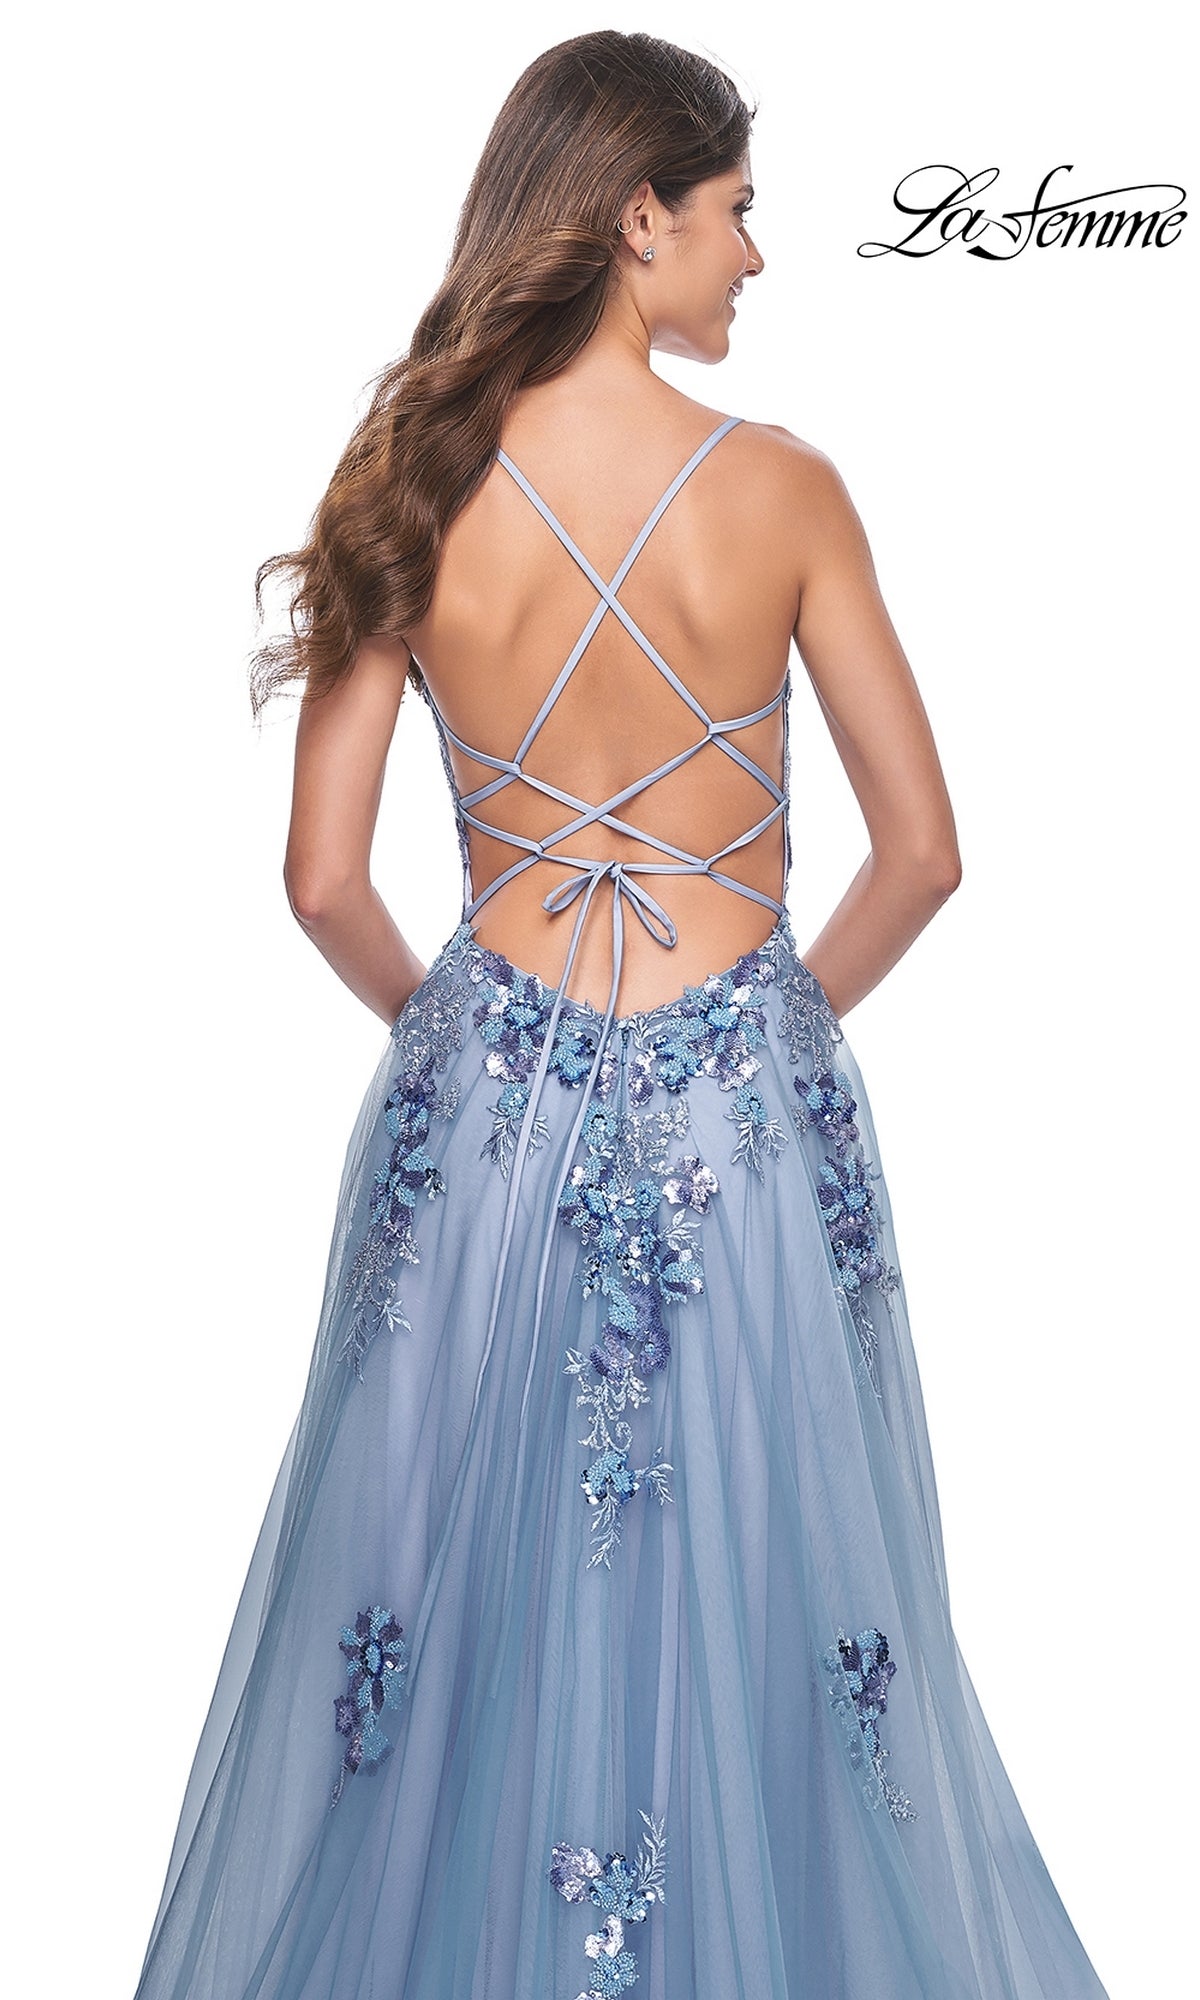  La Femme 32057 Formal Prom Dress